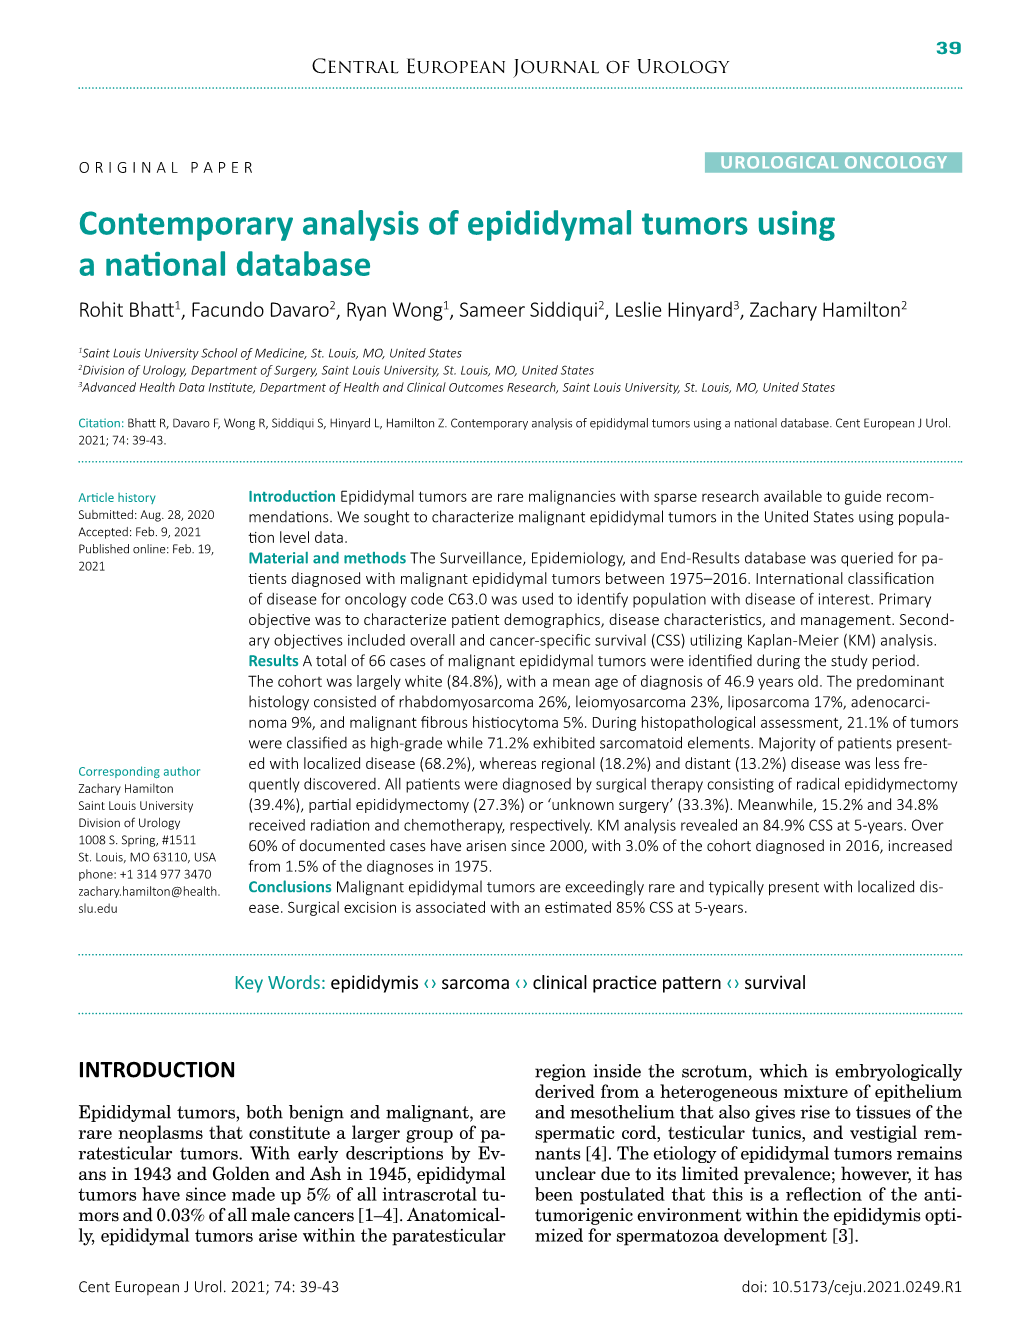 Contemporary Analysis of Epididymal Tumors Using a National Database Rohit Bhatt1, Facundo Davaro2, Ryan Wong1, Sameer Siddiqui2, Leslie Hinyard3, Zachary Hamilton2